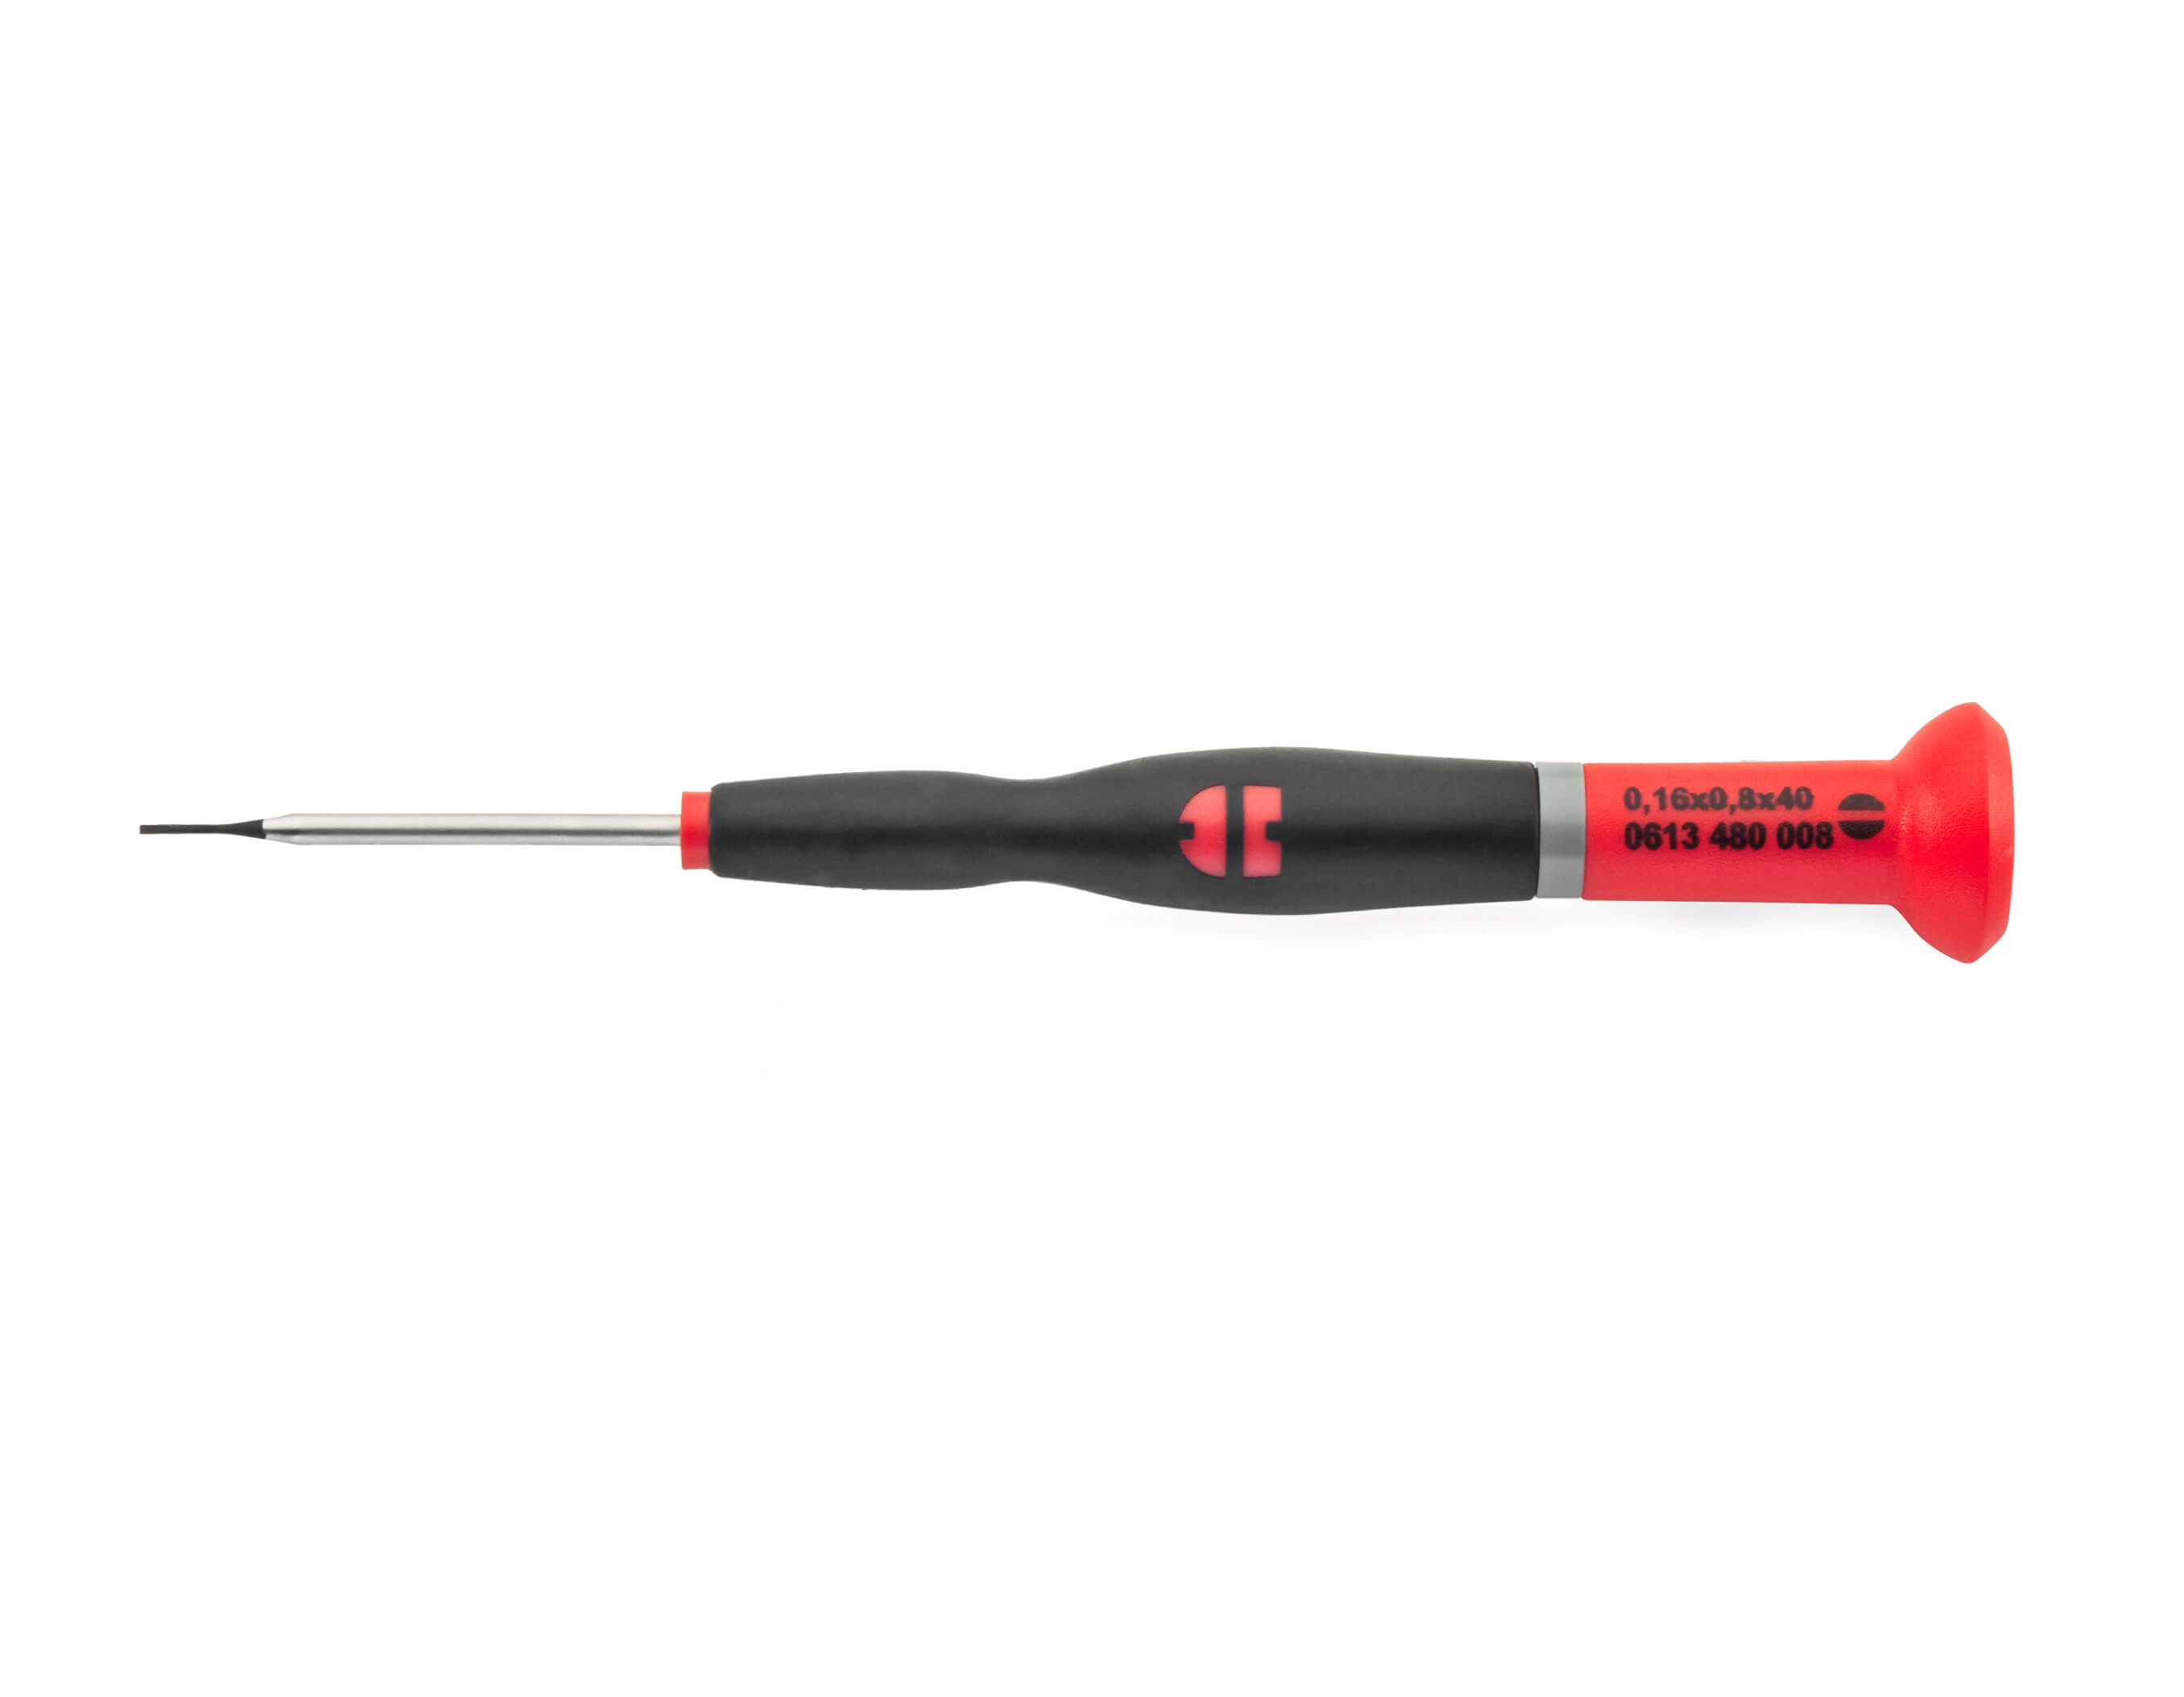 Precision screwdriver slt blk tip 0.16X0.8X40-OD